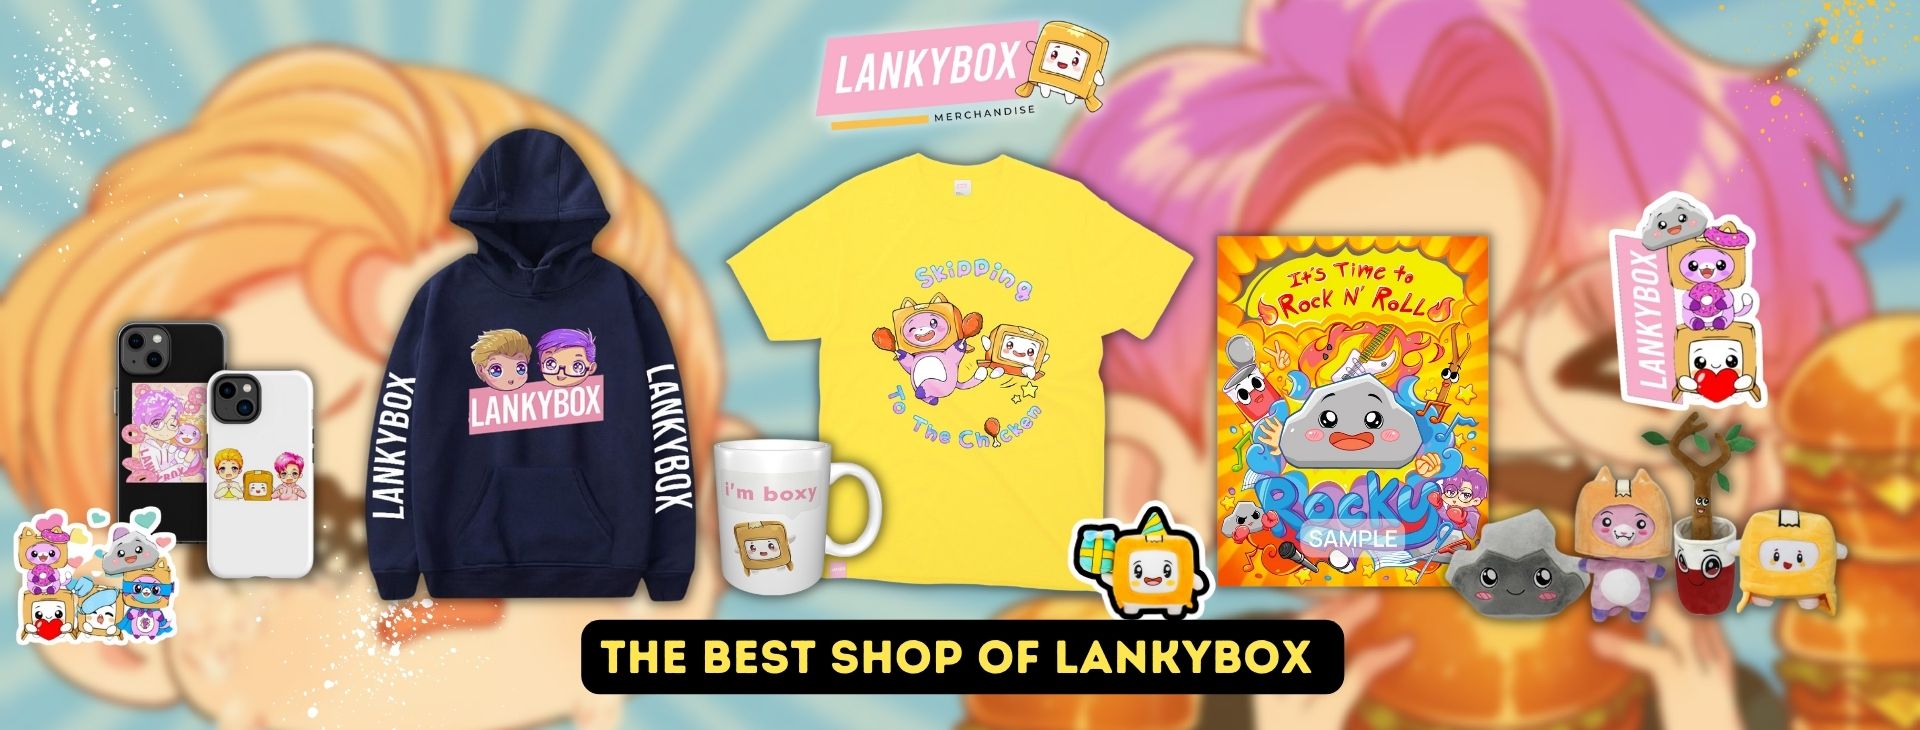 Lanky Box Merchandise Banner - Lankybox Merch